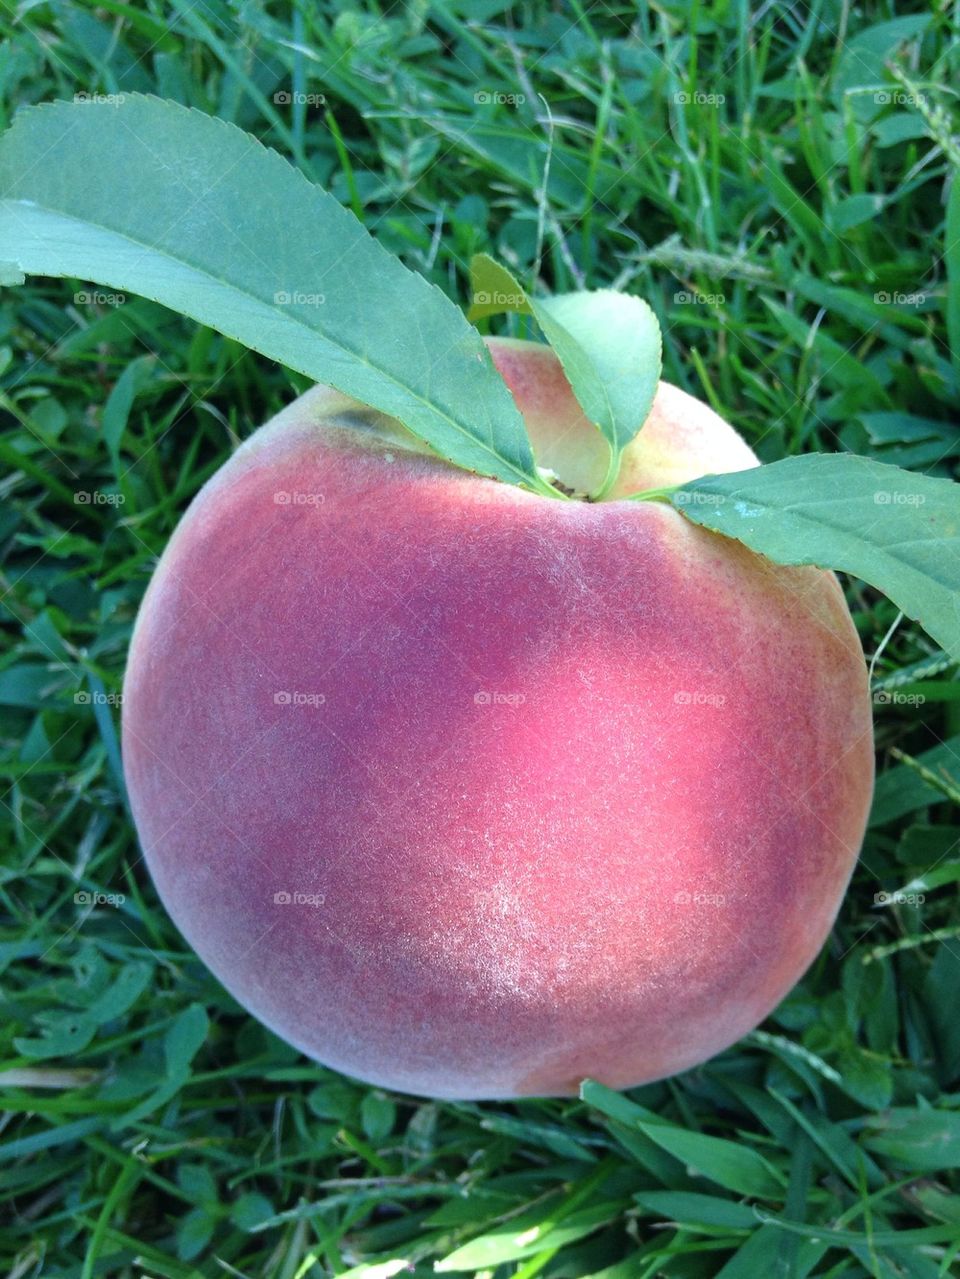 Just peachy